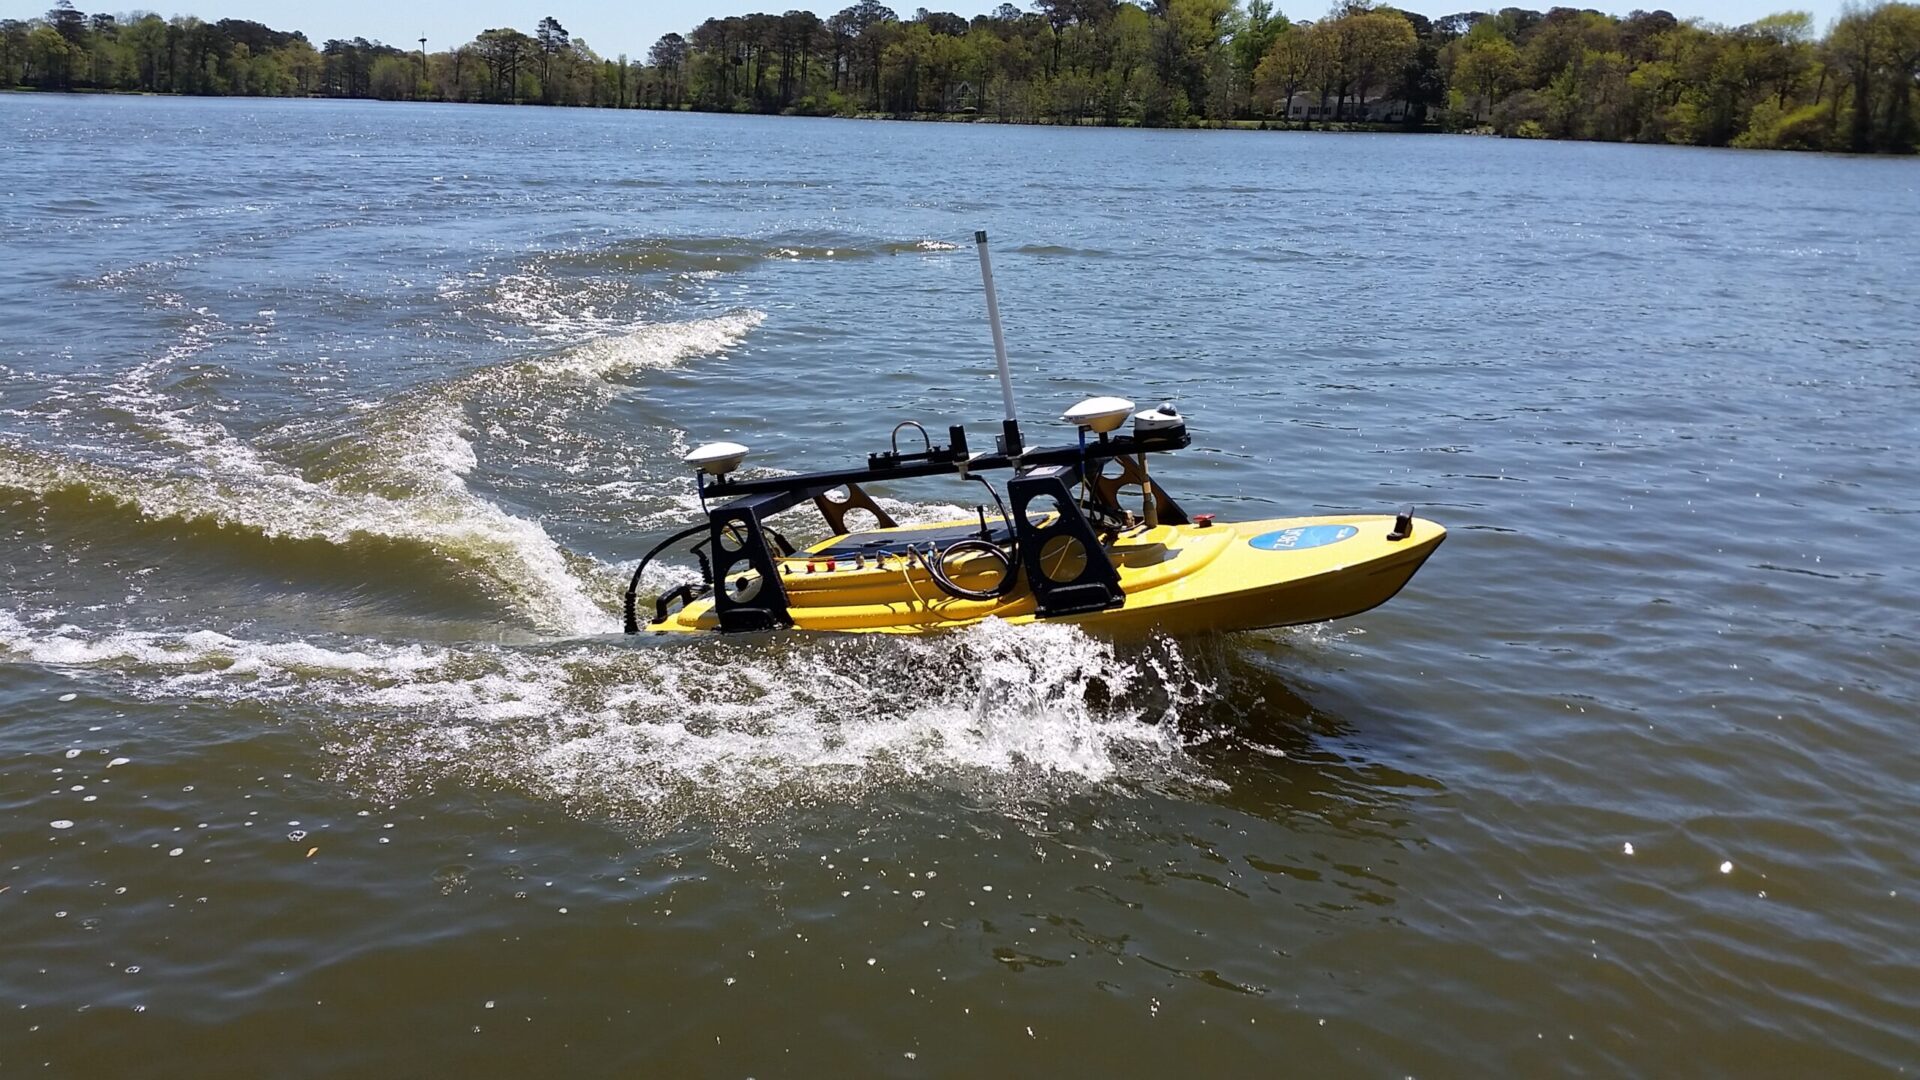 Army Innovation Award – Robotic Z-Boat